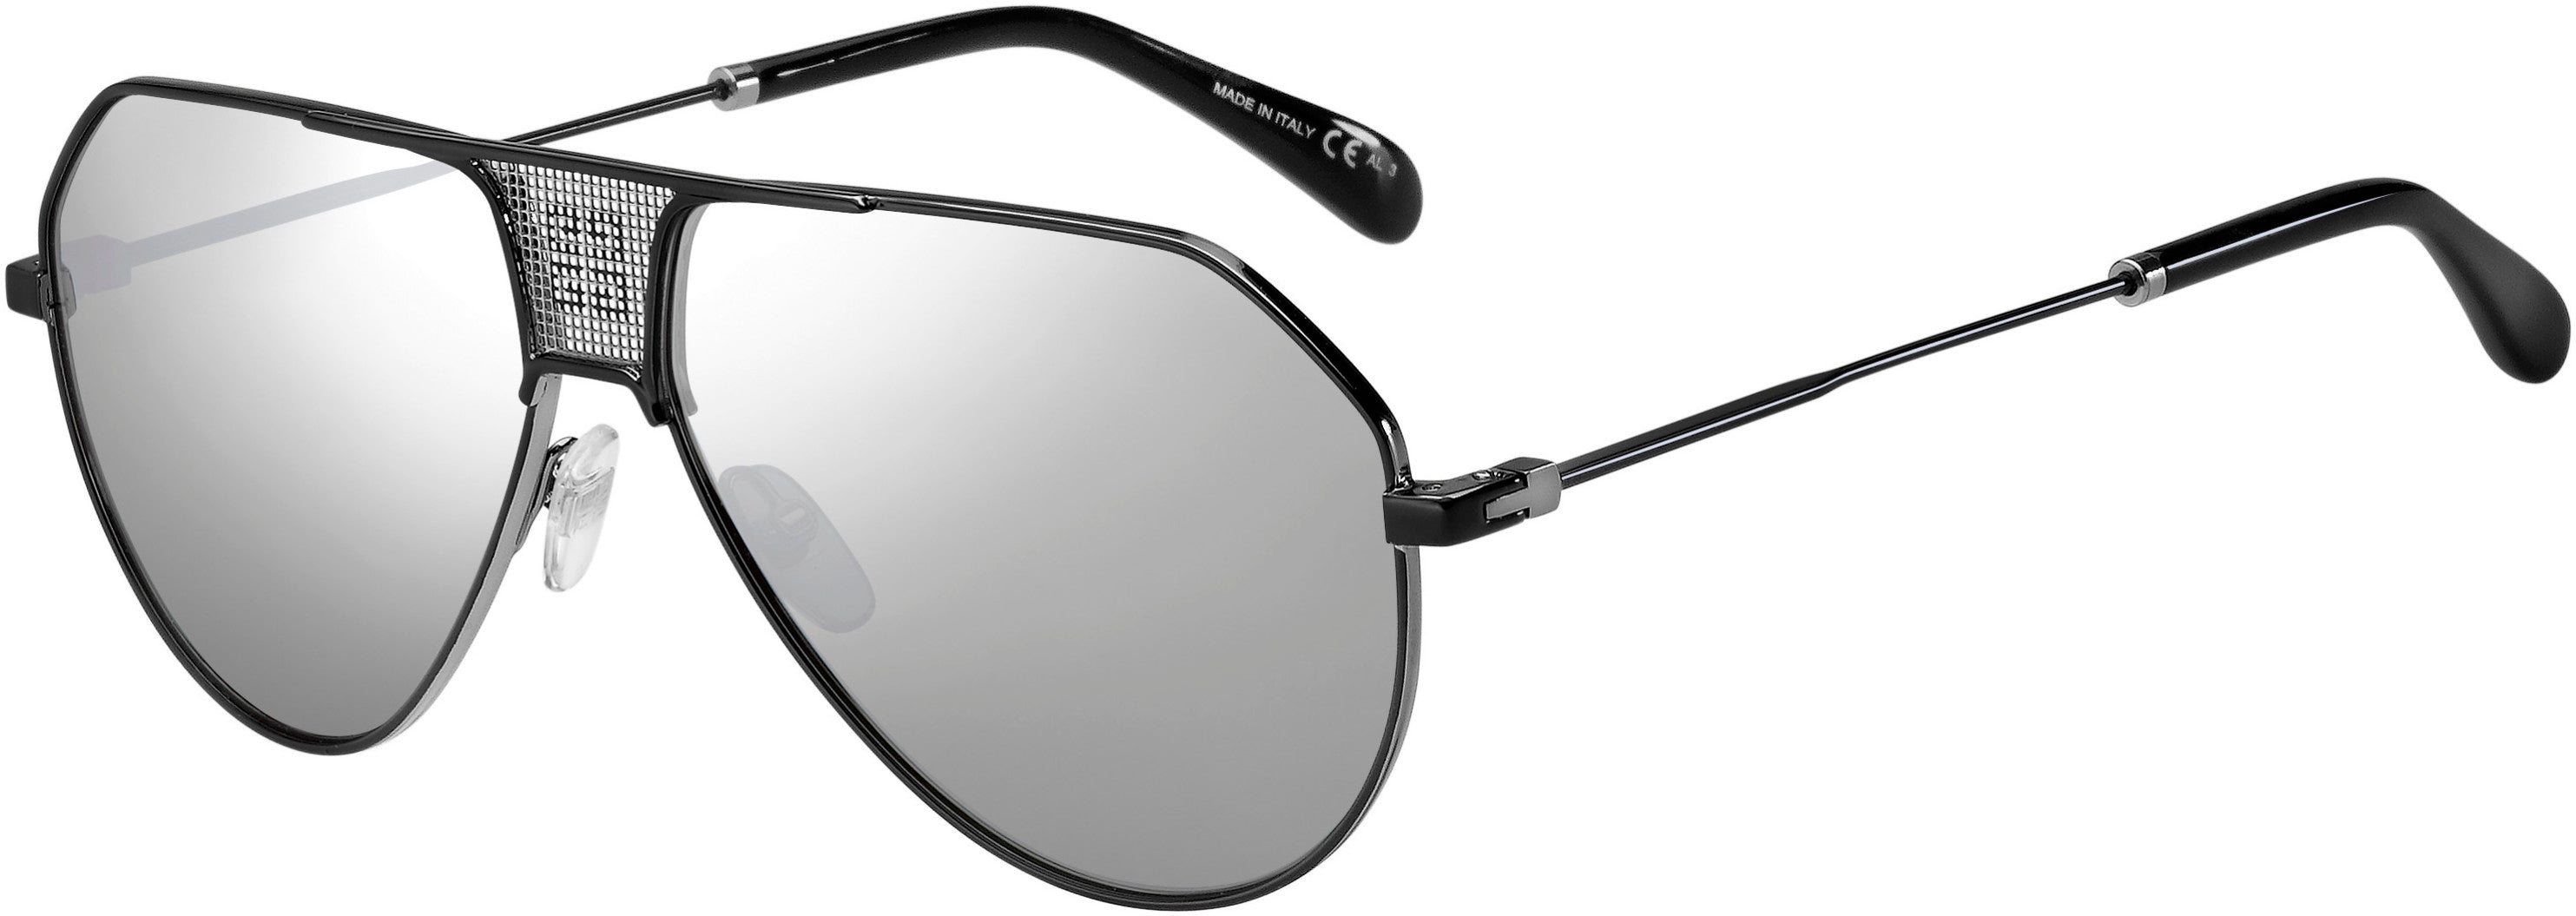  Givenchy 7137/S Aviator Sunglasses 0284-0284  Black Ruthenium (T4 Silver Mirror)